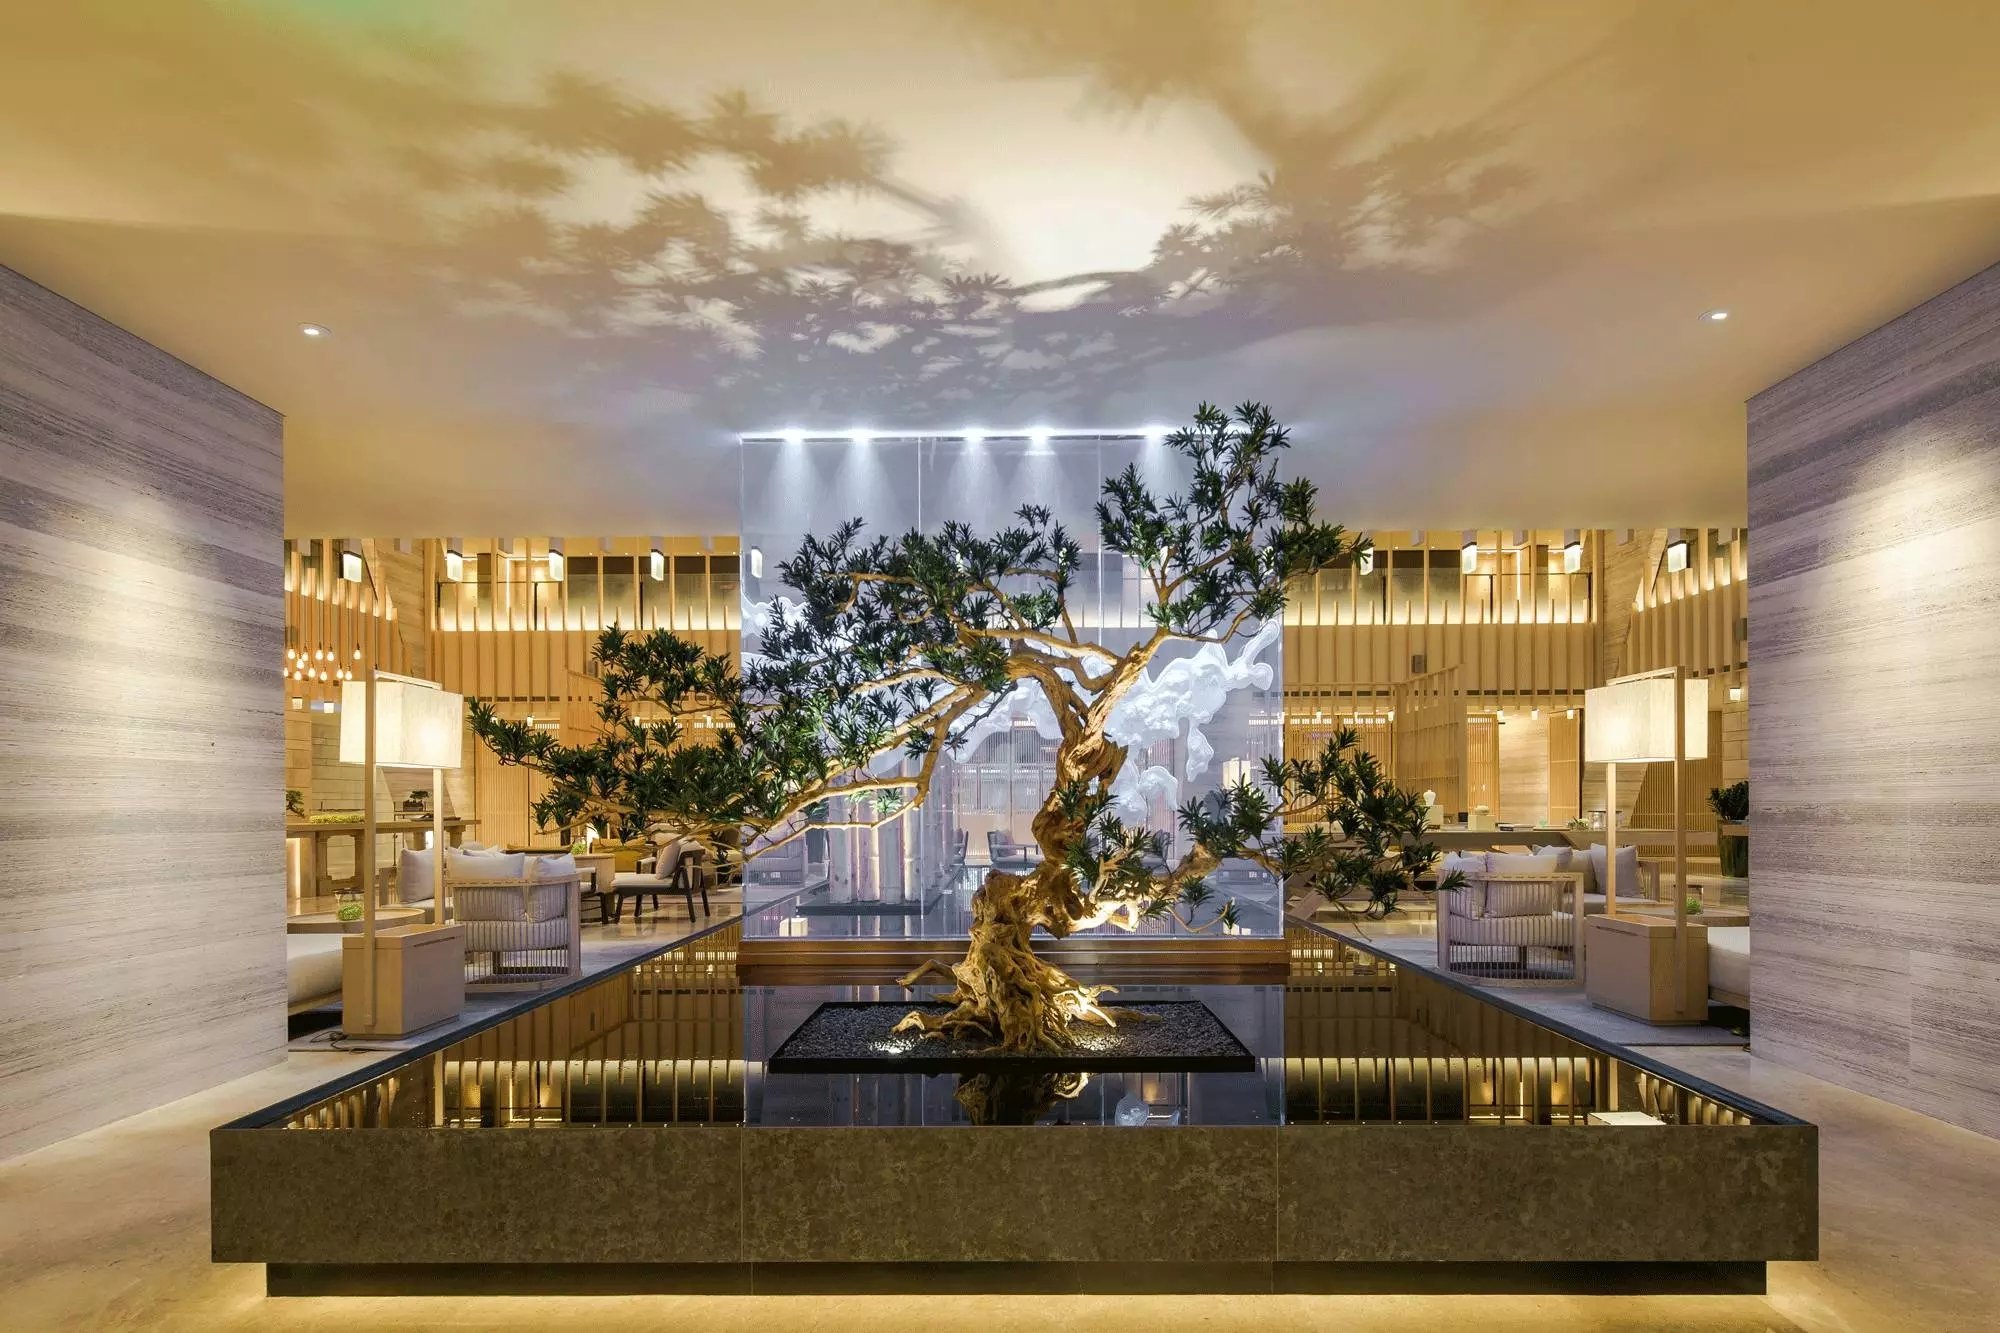 Design of Hilton South Sea Wing Hotel Lobby